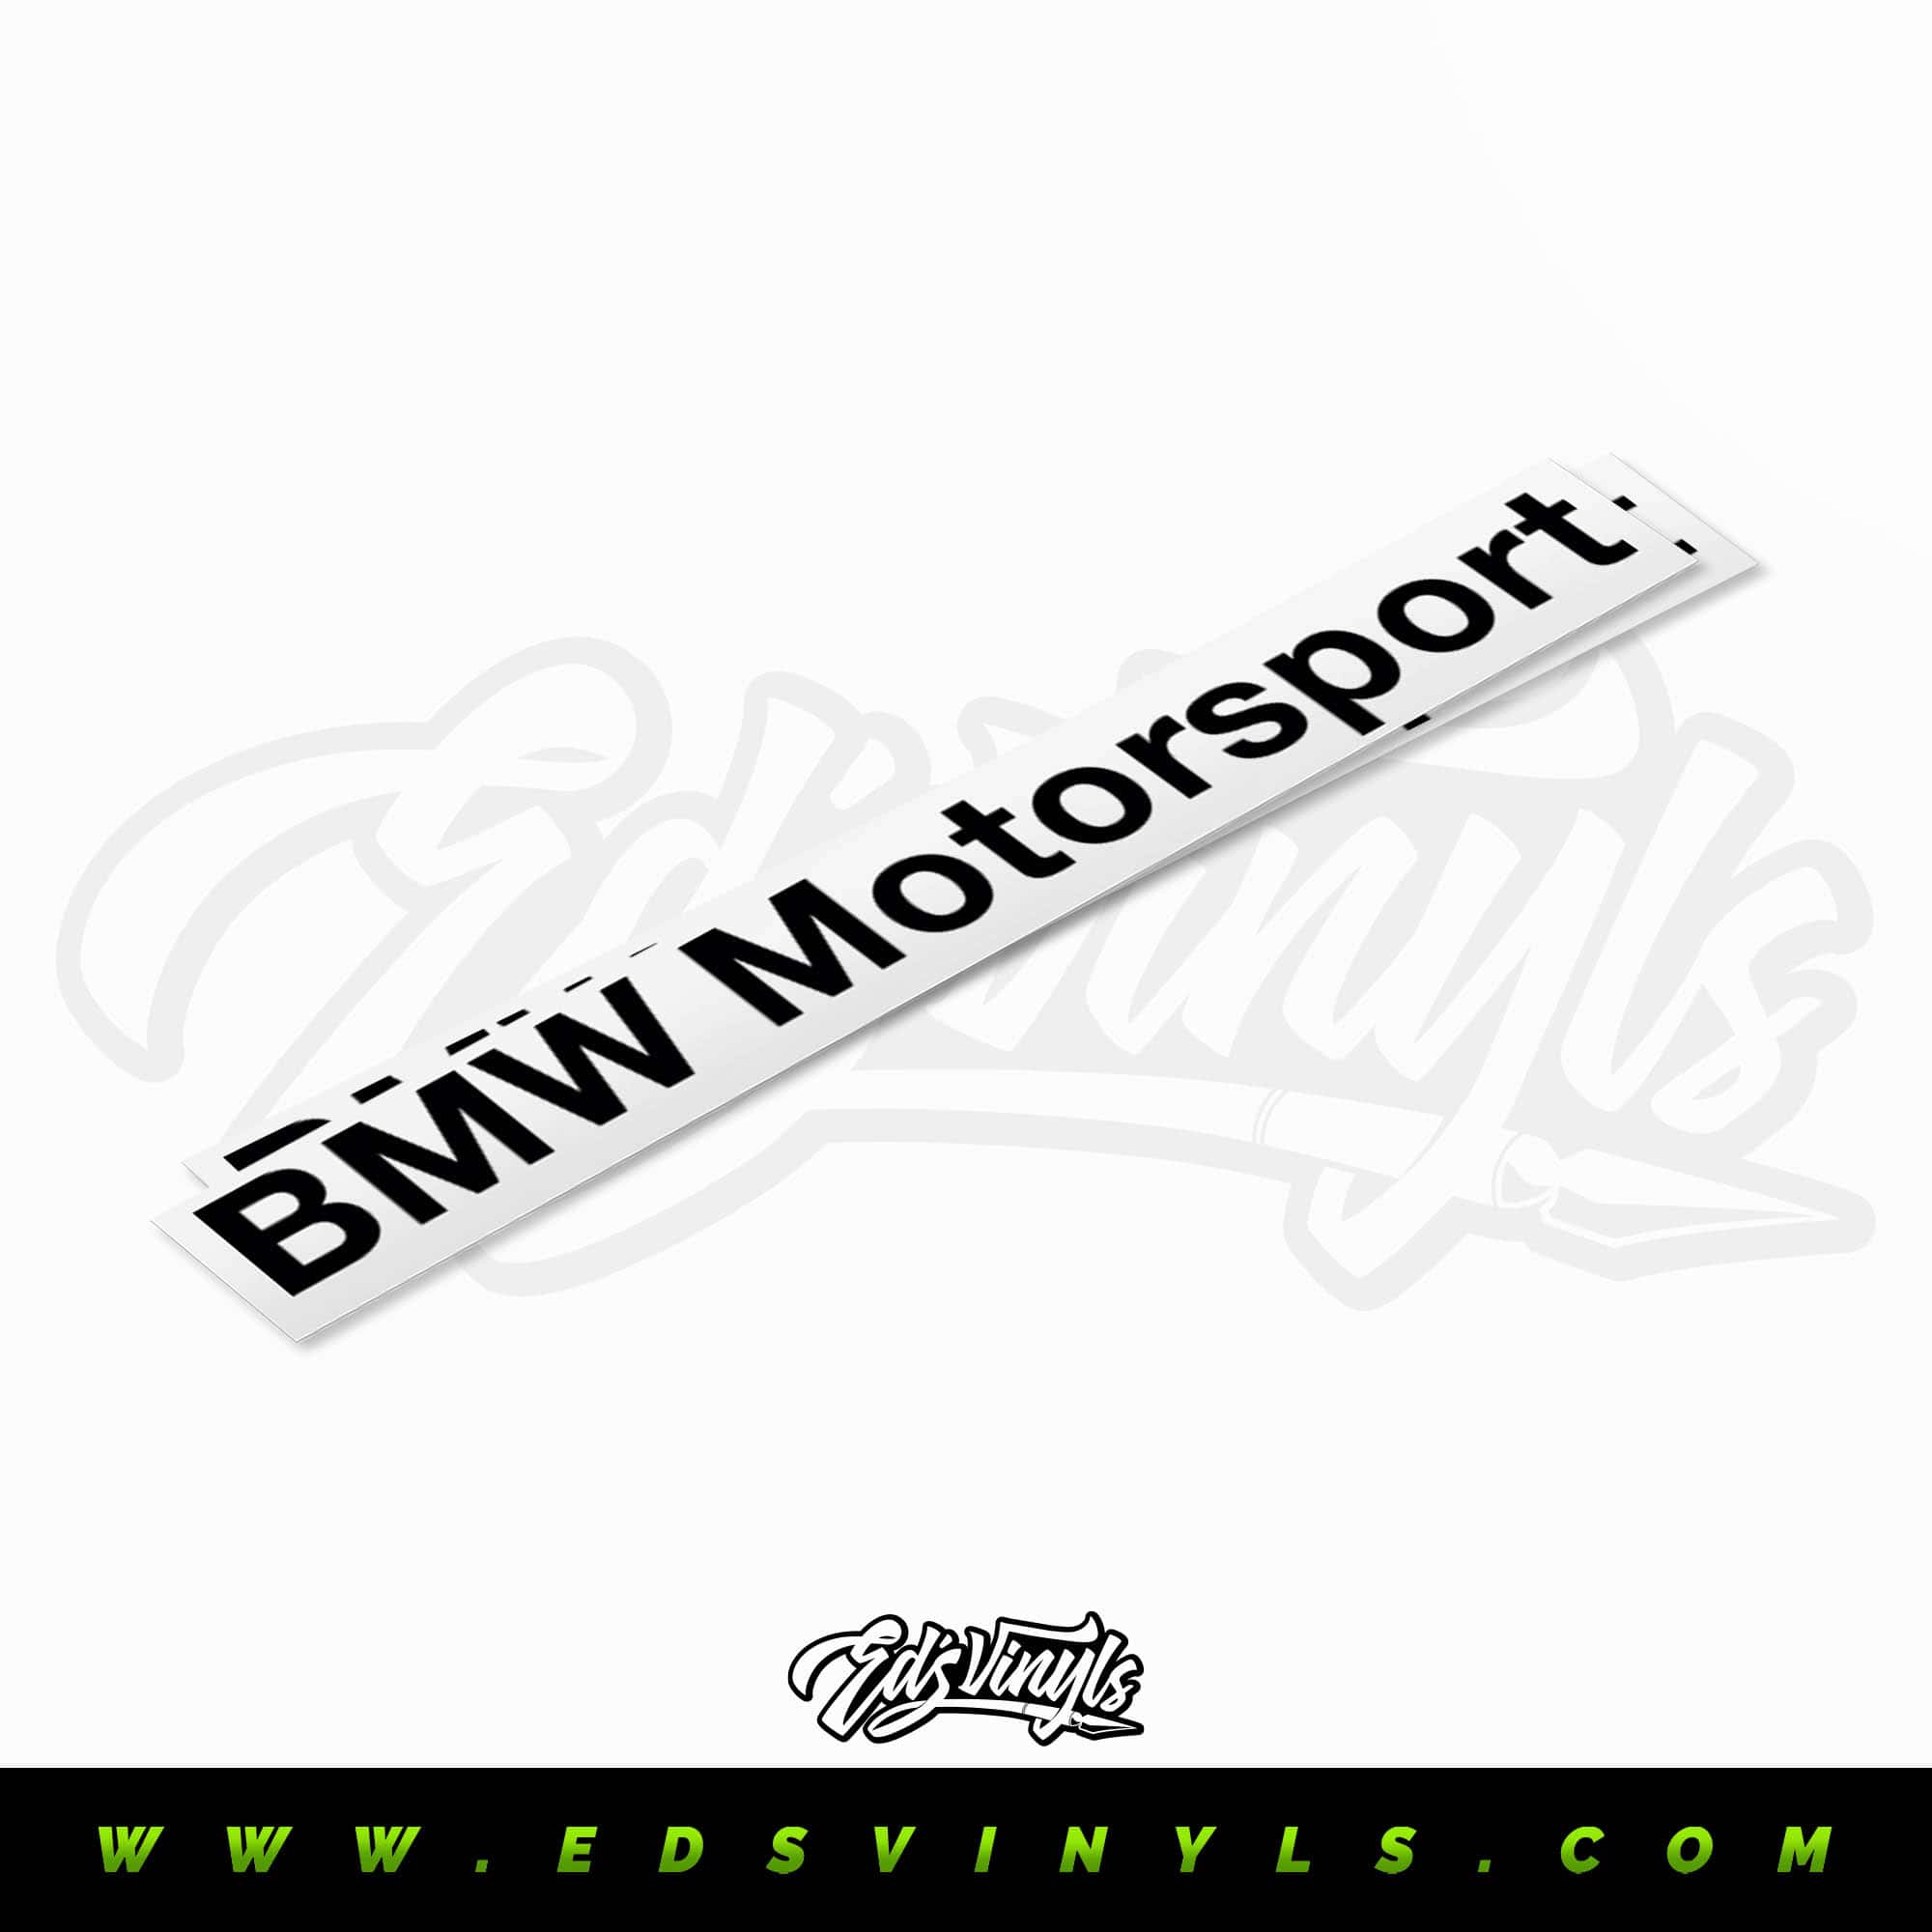 Bmw motorsport - Edsvinyls